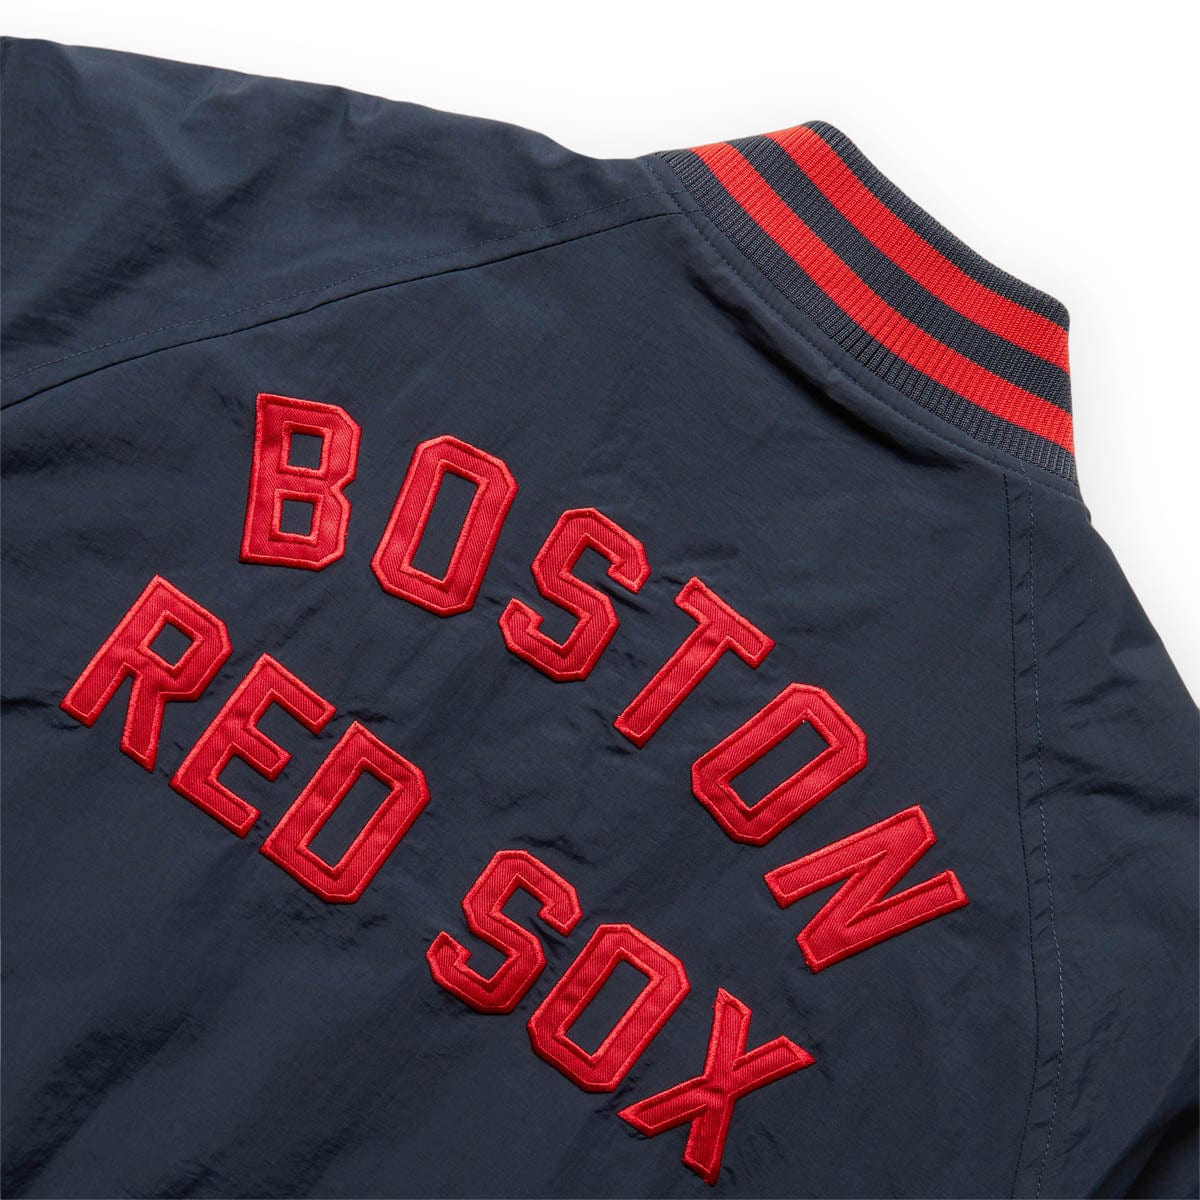 BOSTON RED SOX WARM UP JACKET NAVY